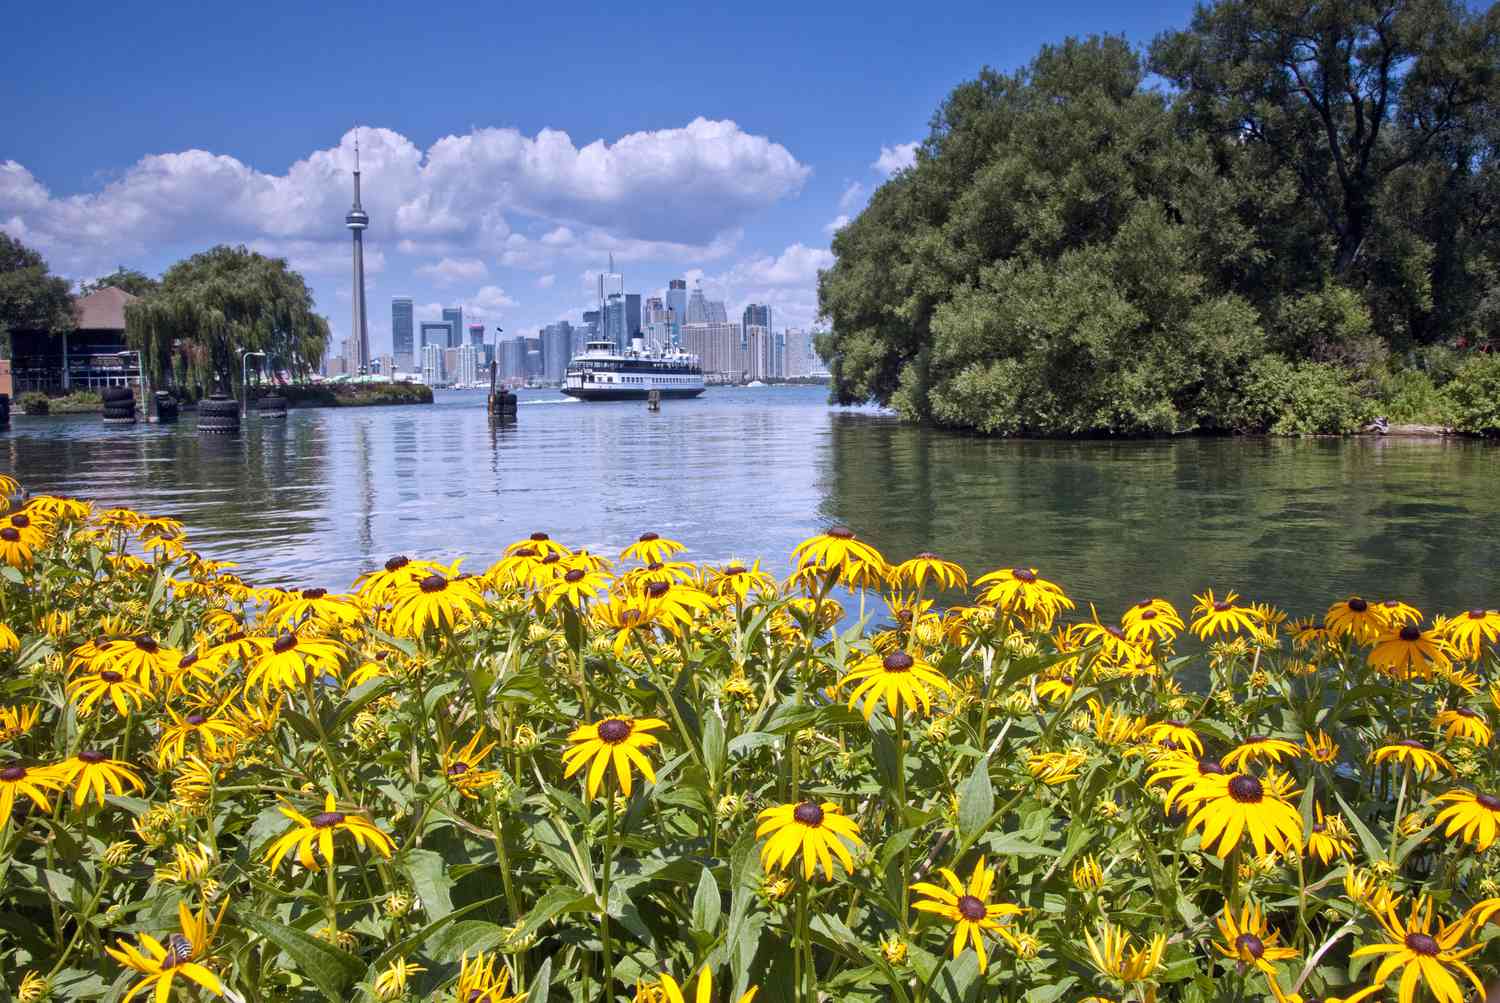 Take a ferry to Toronto Islands